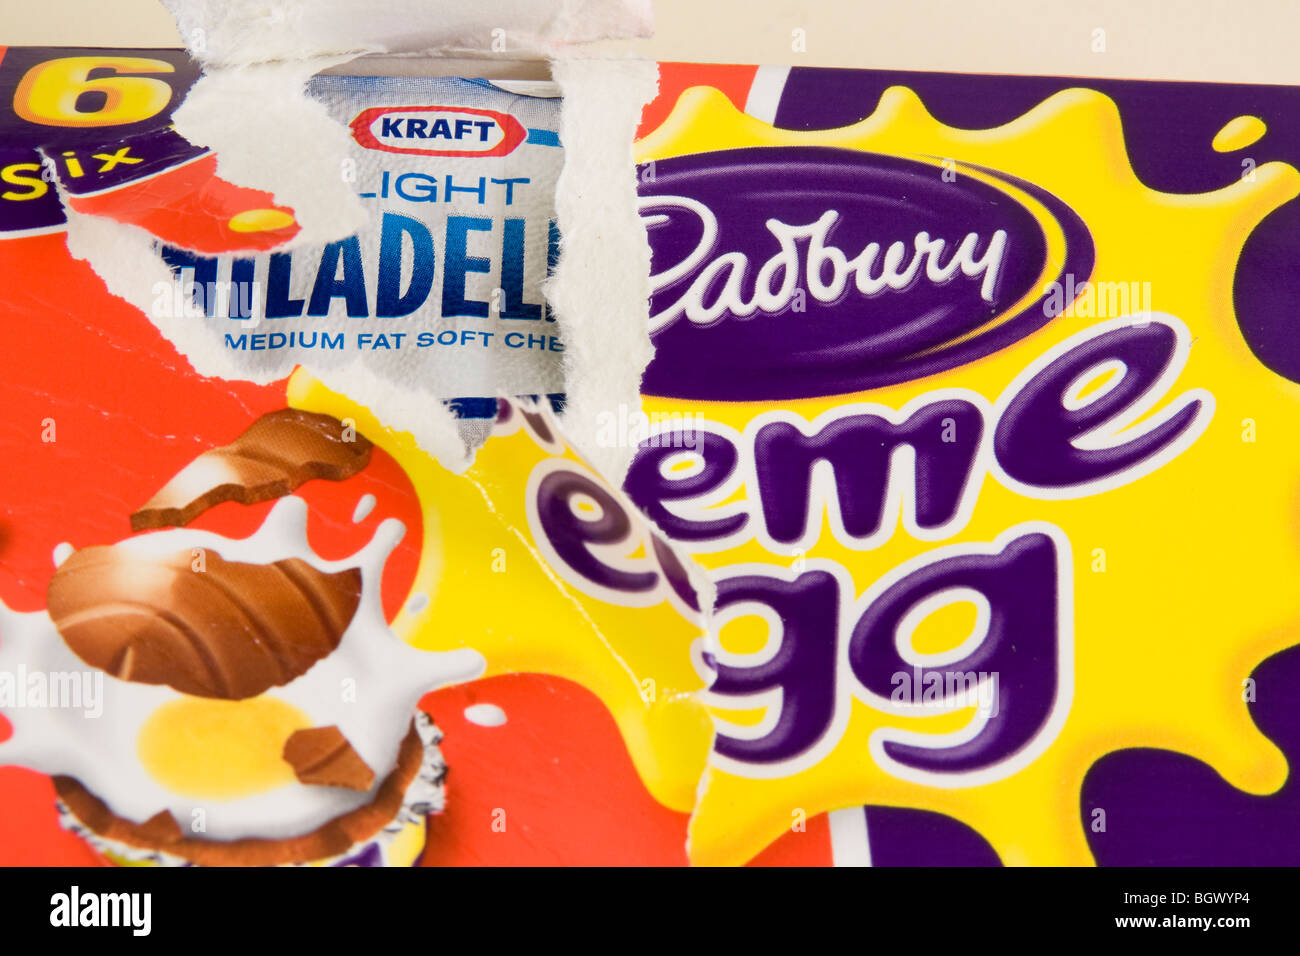 Cadburys Creme Egg Box containing Kraft cheese Stock Photo